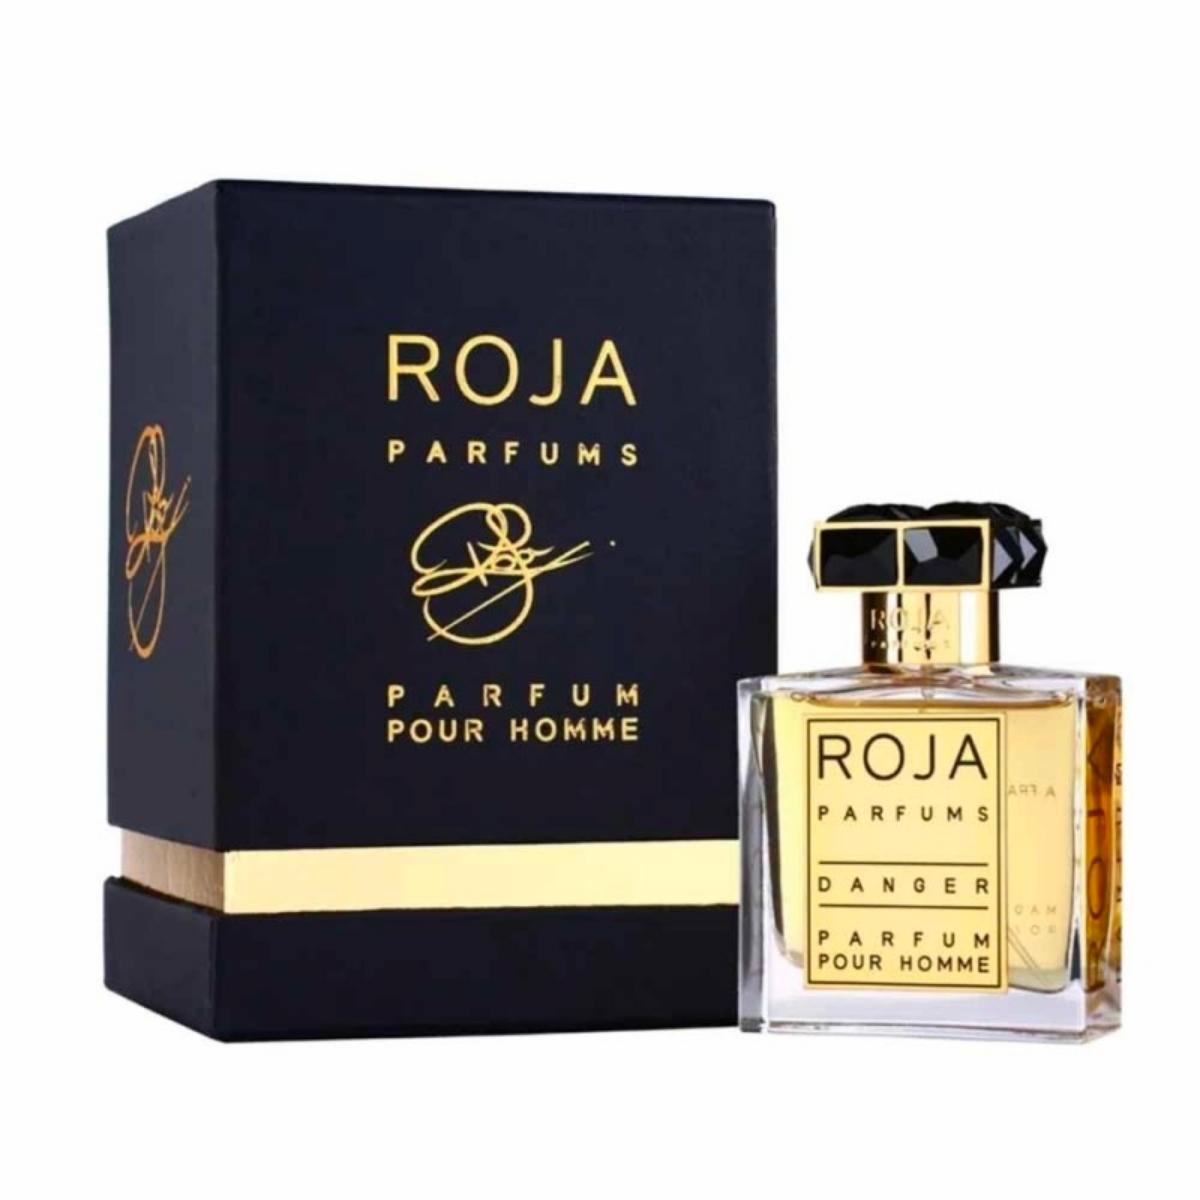 Roja Parfum Danger Parfume For Men